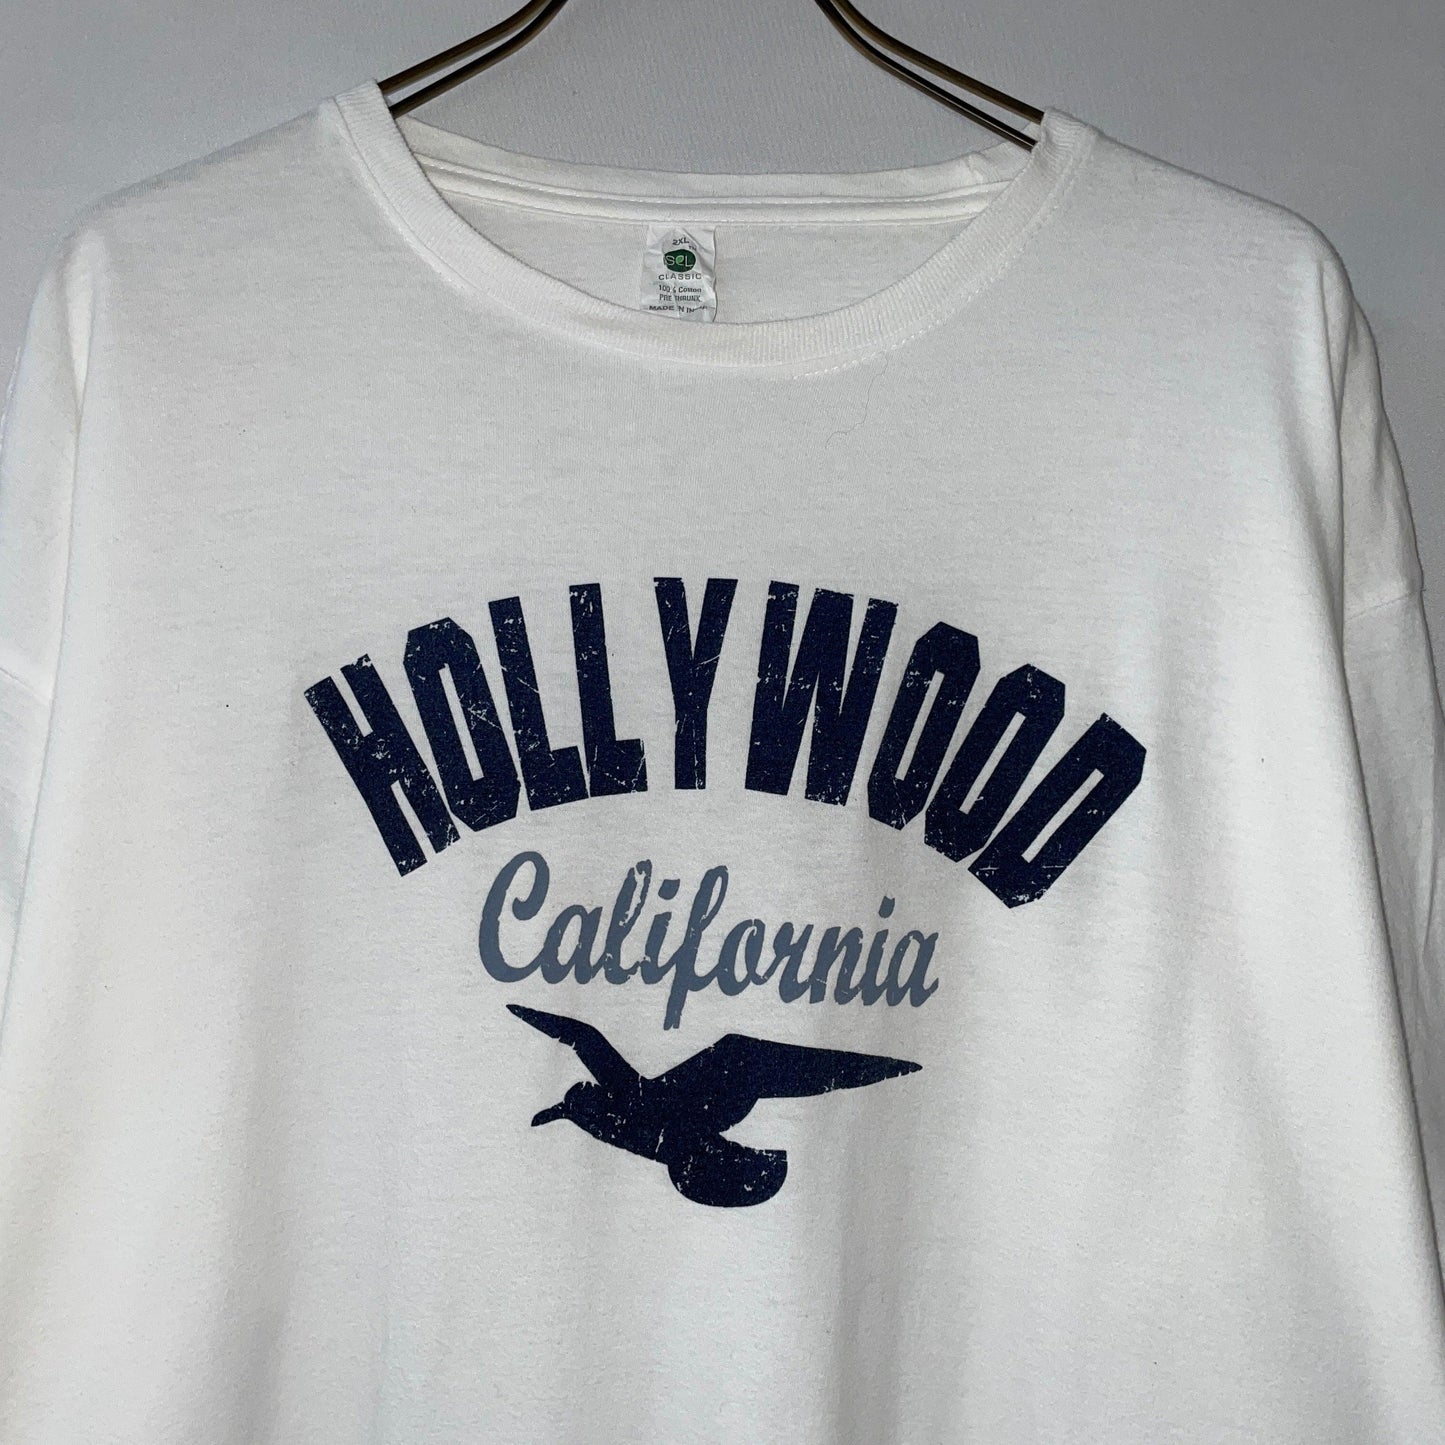 Tee Hollywood T-shirt